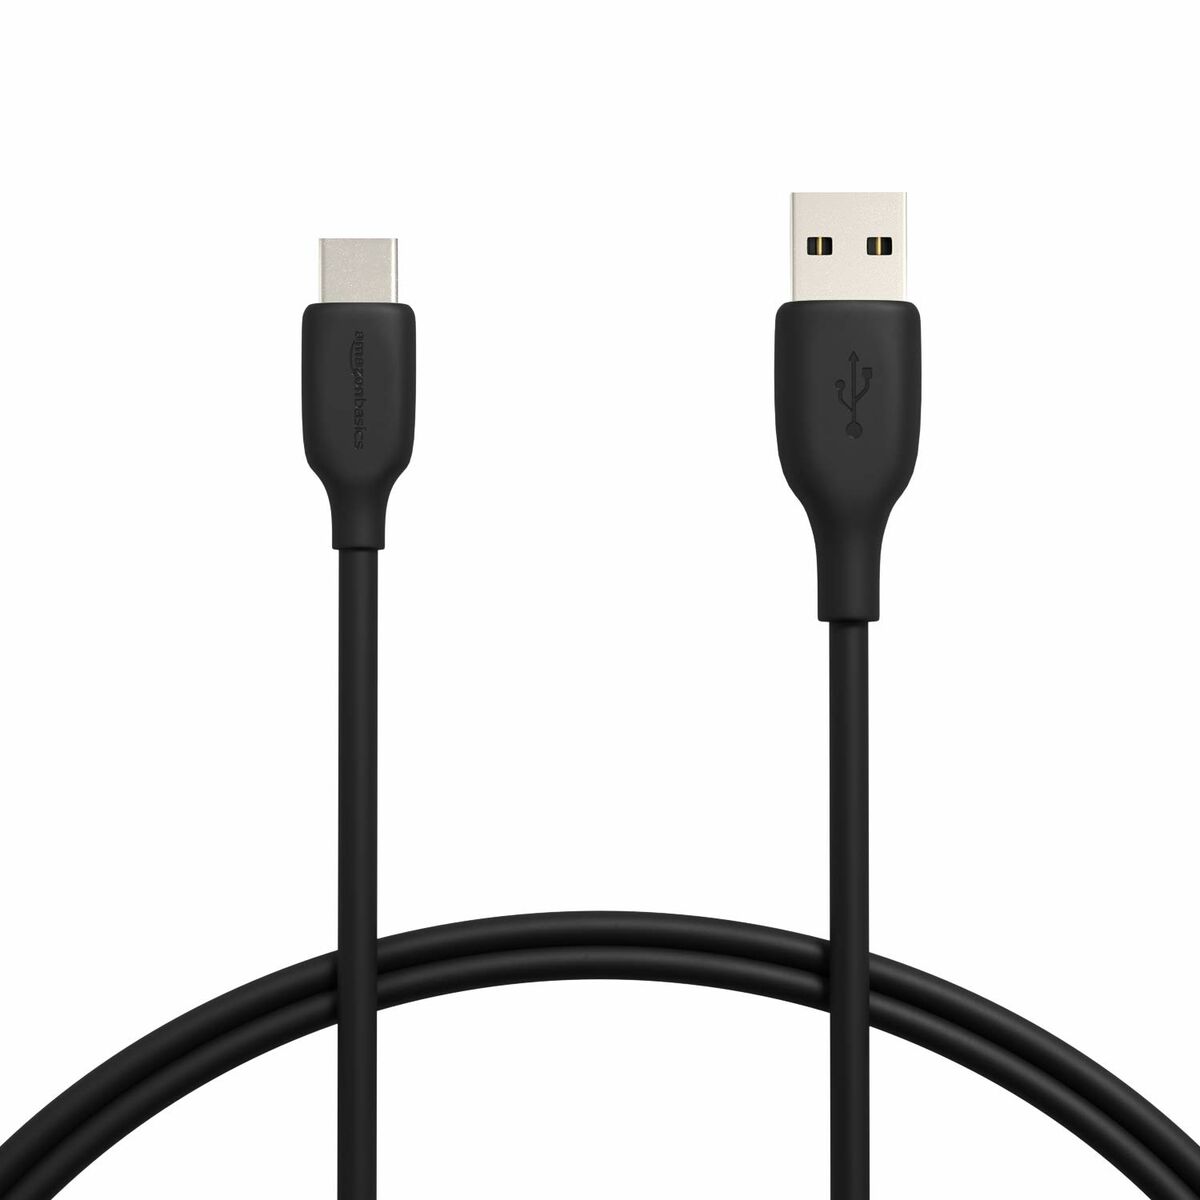 USB Cable Amazon Basics 2.0-CM-AM-3FT Black (Refurbished A+)